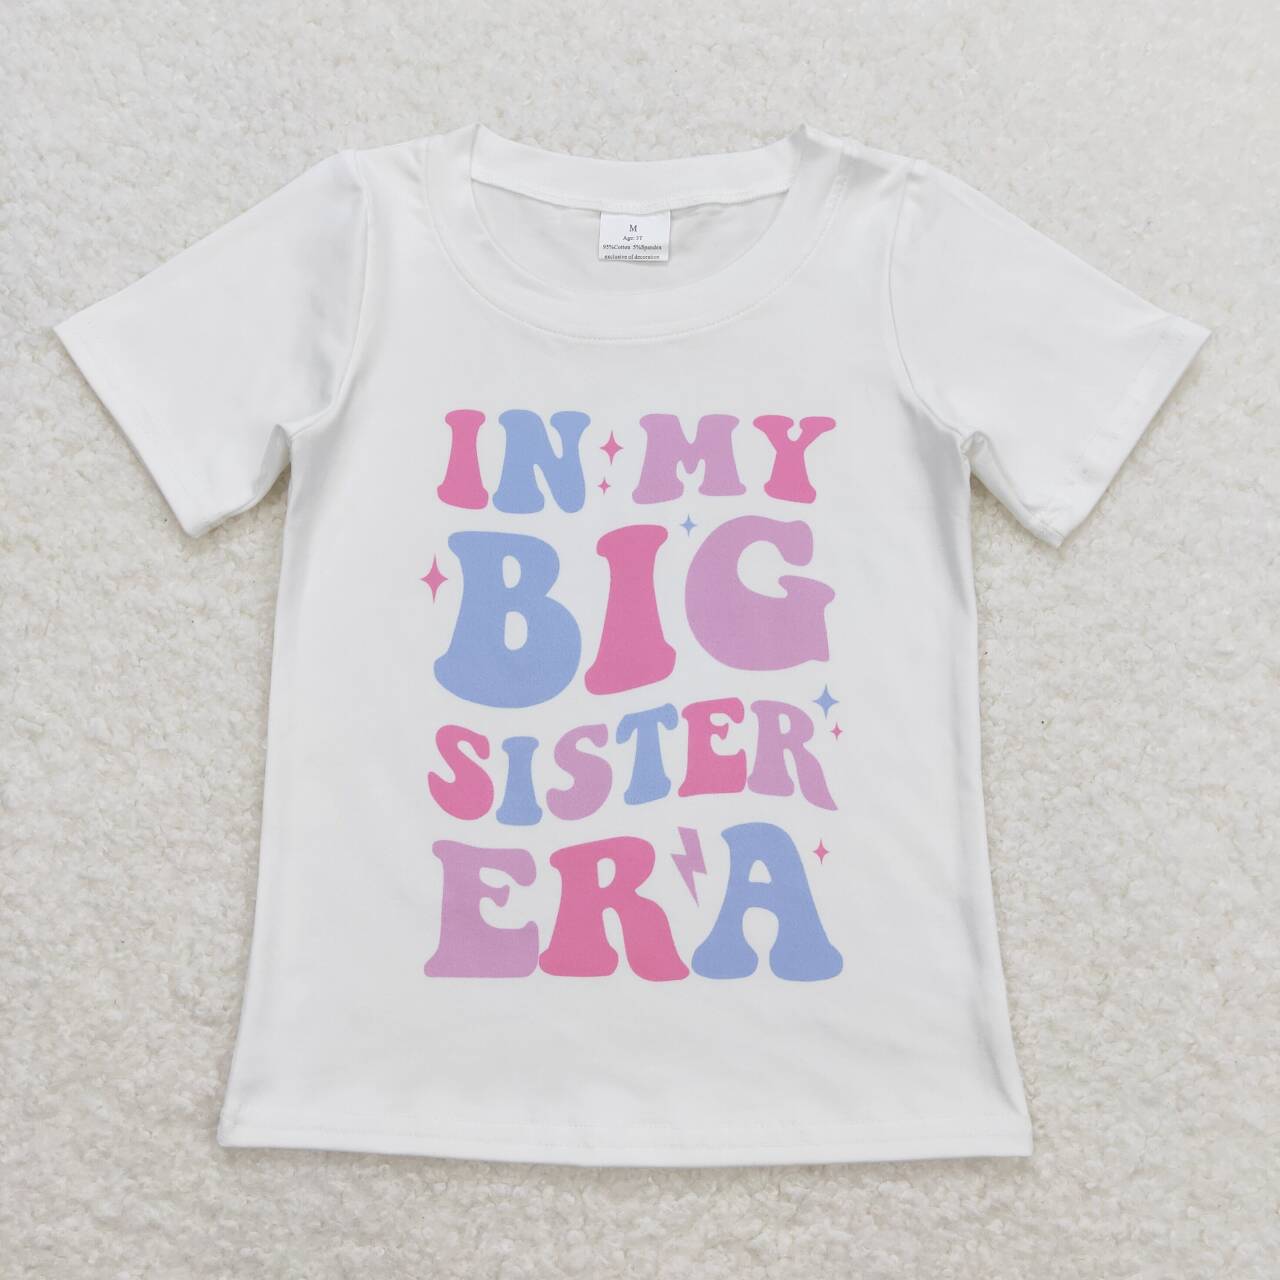 in my big sister era white t shirt